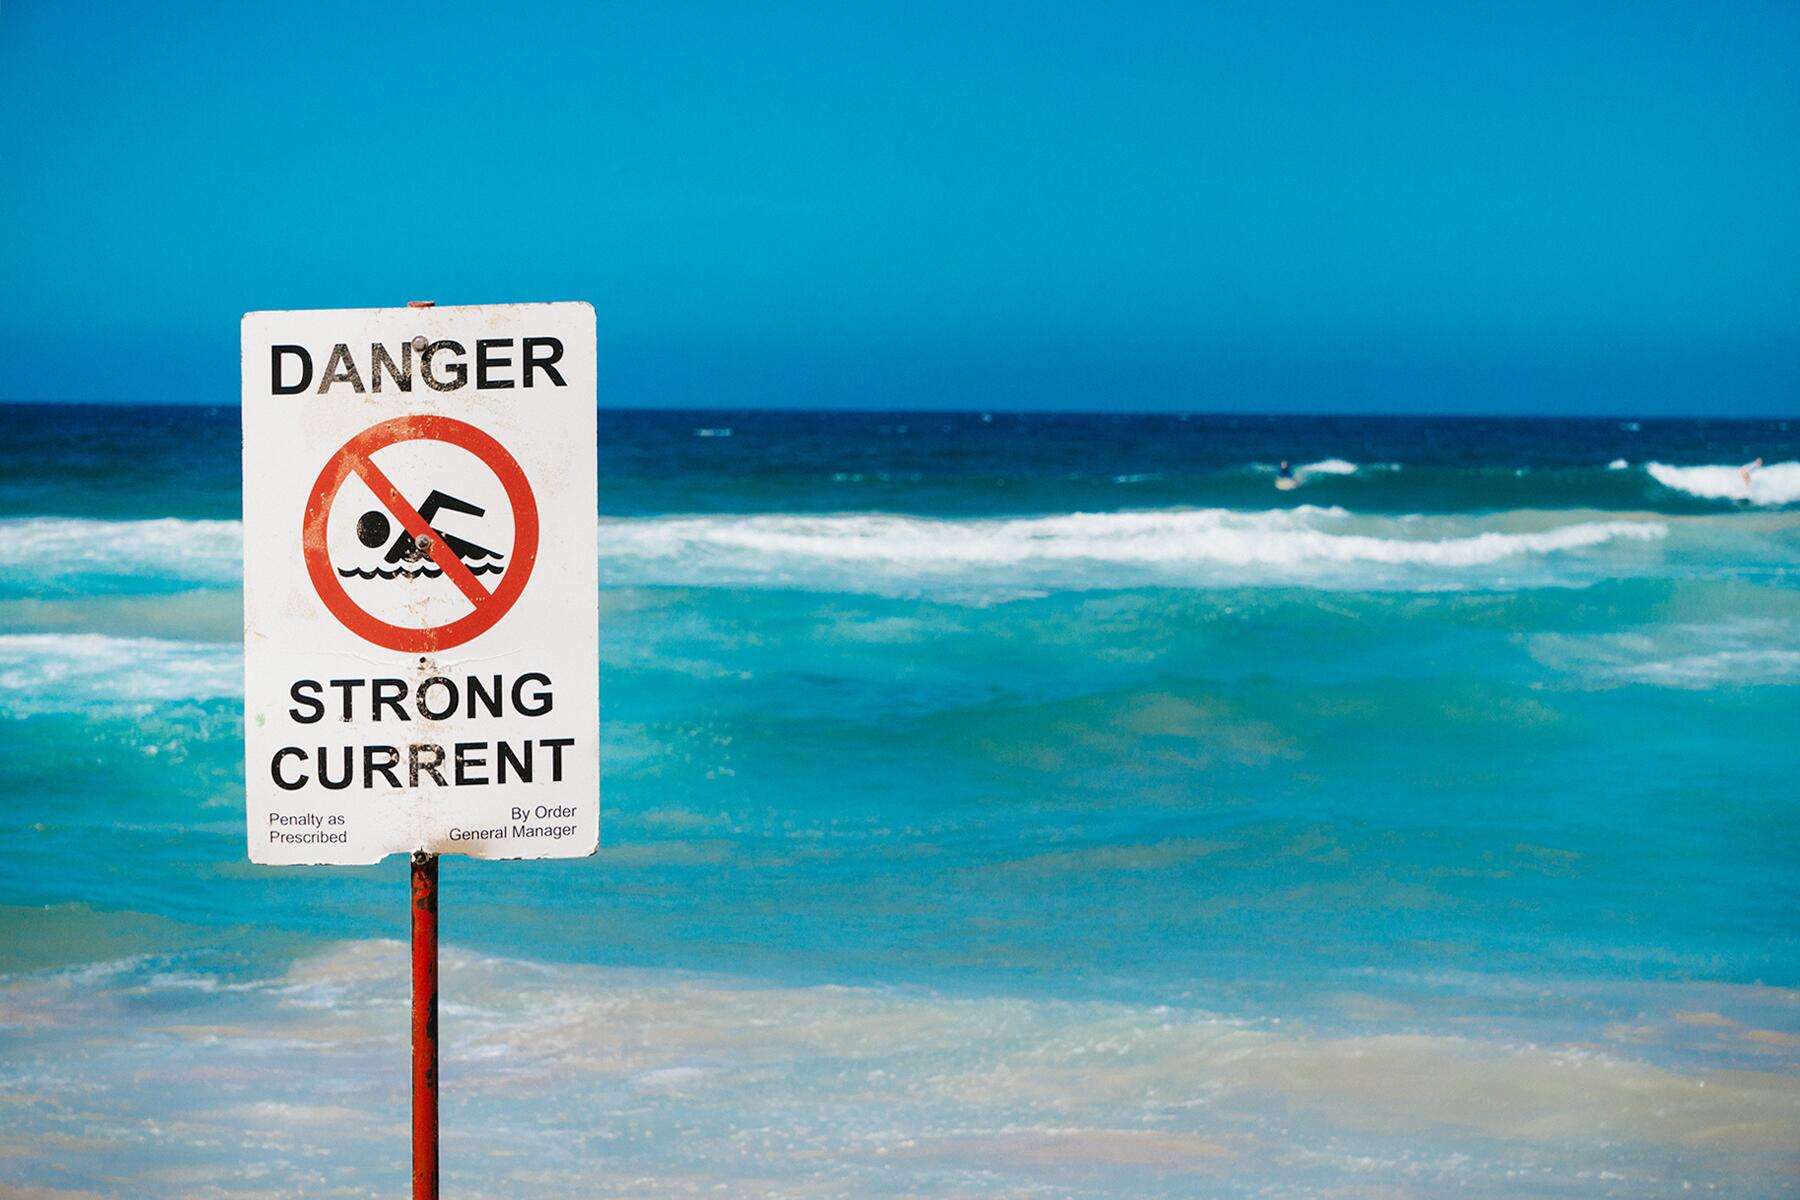 World’s Most Dangerous Beaches